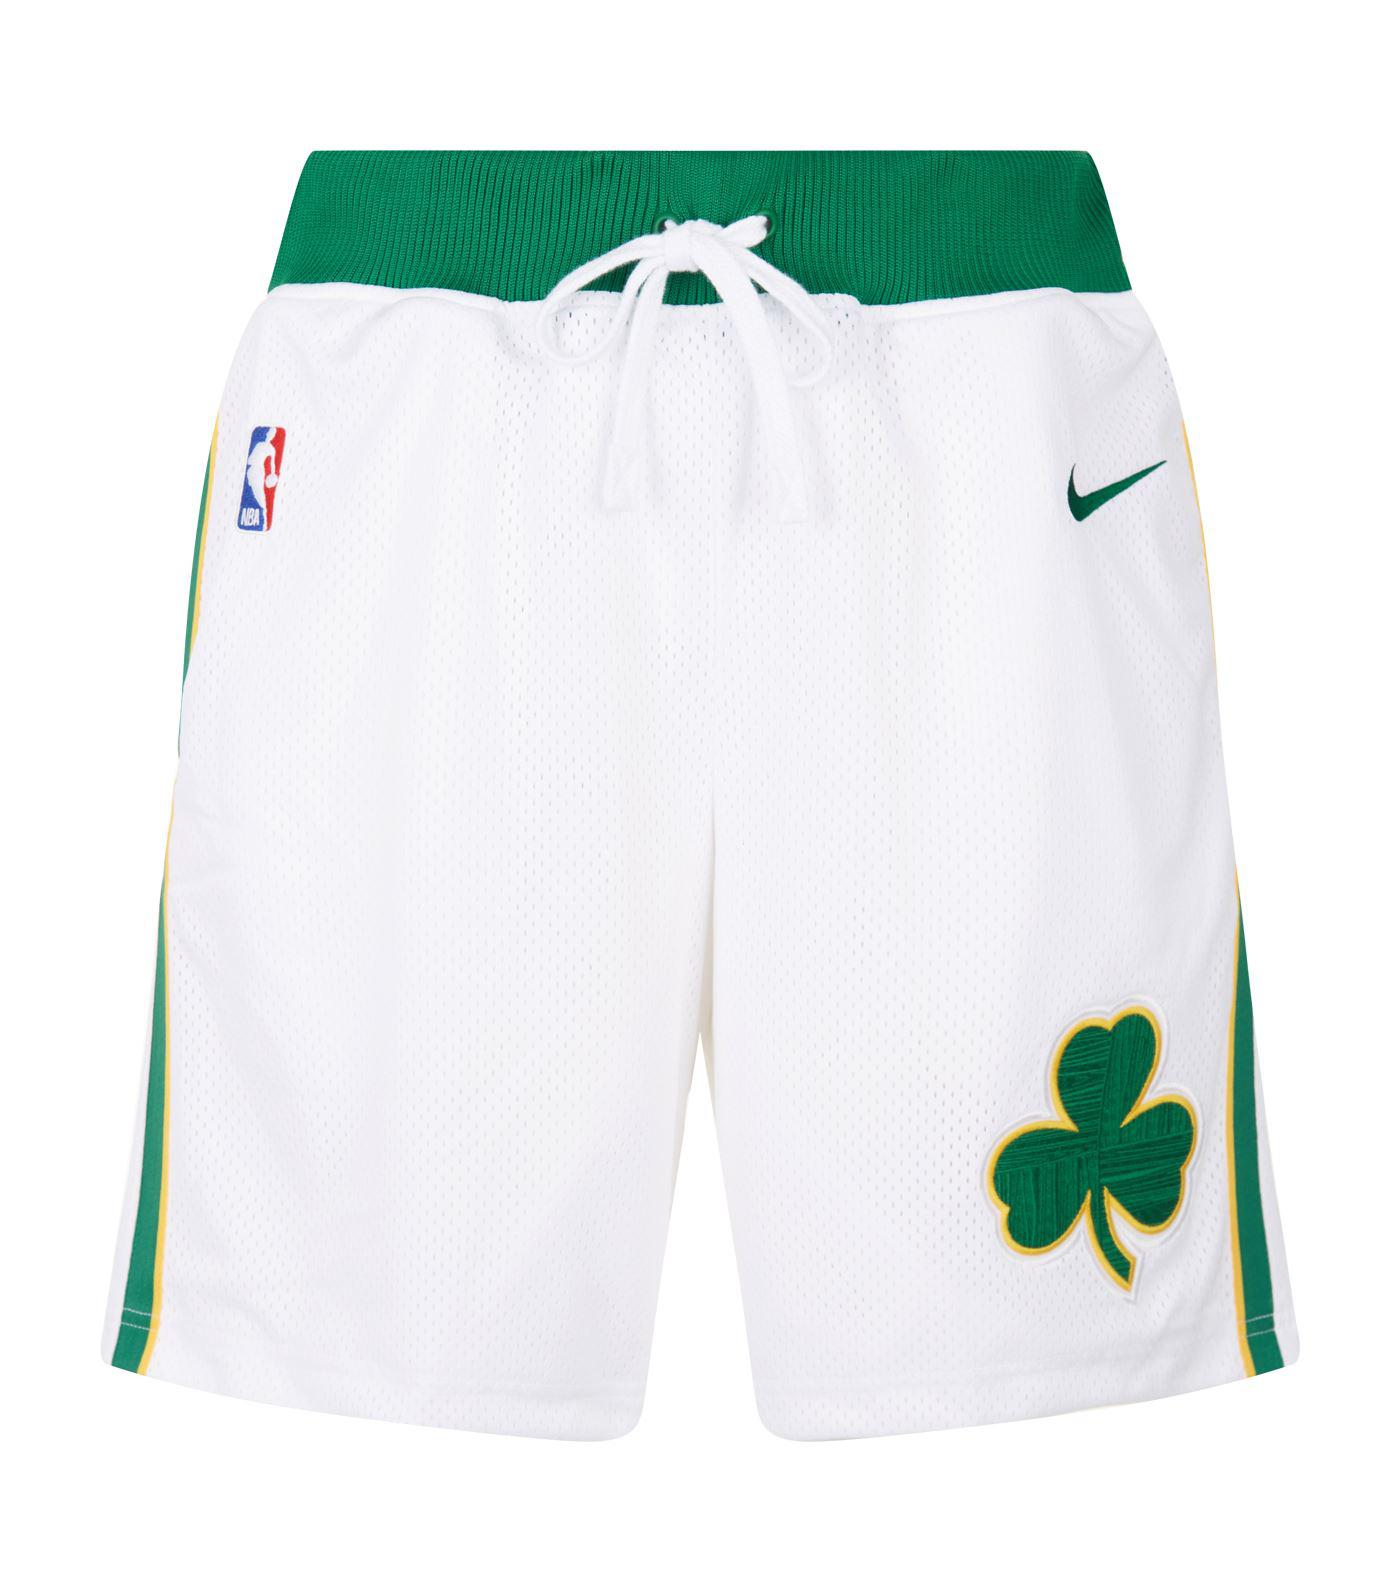 Buy > boston celtics nike shorts > in stock